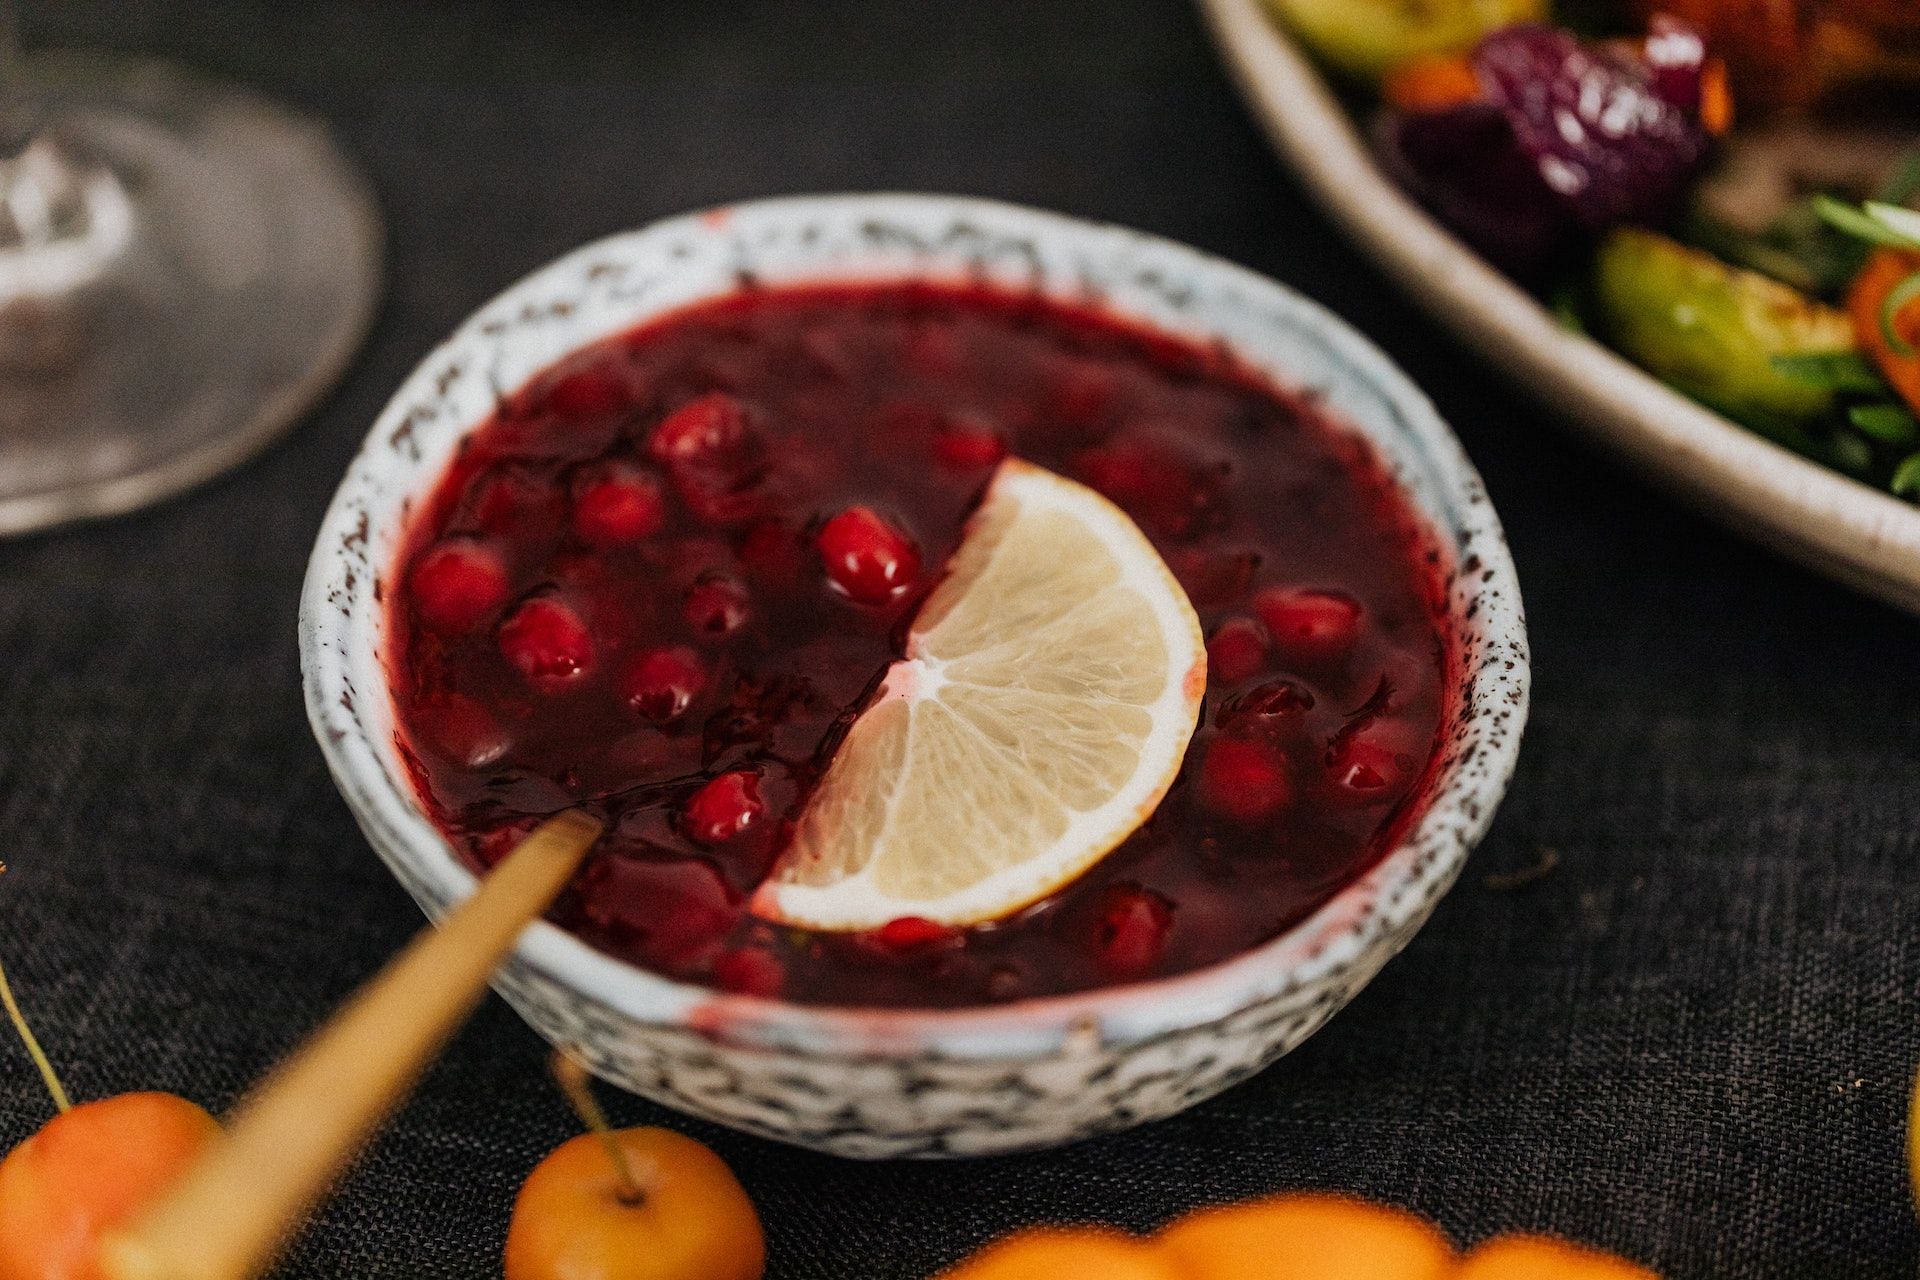 Benefits of cranberry includes slowing down cancer progression. (Photo via Pexels/Karolina Grabowska)